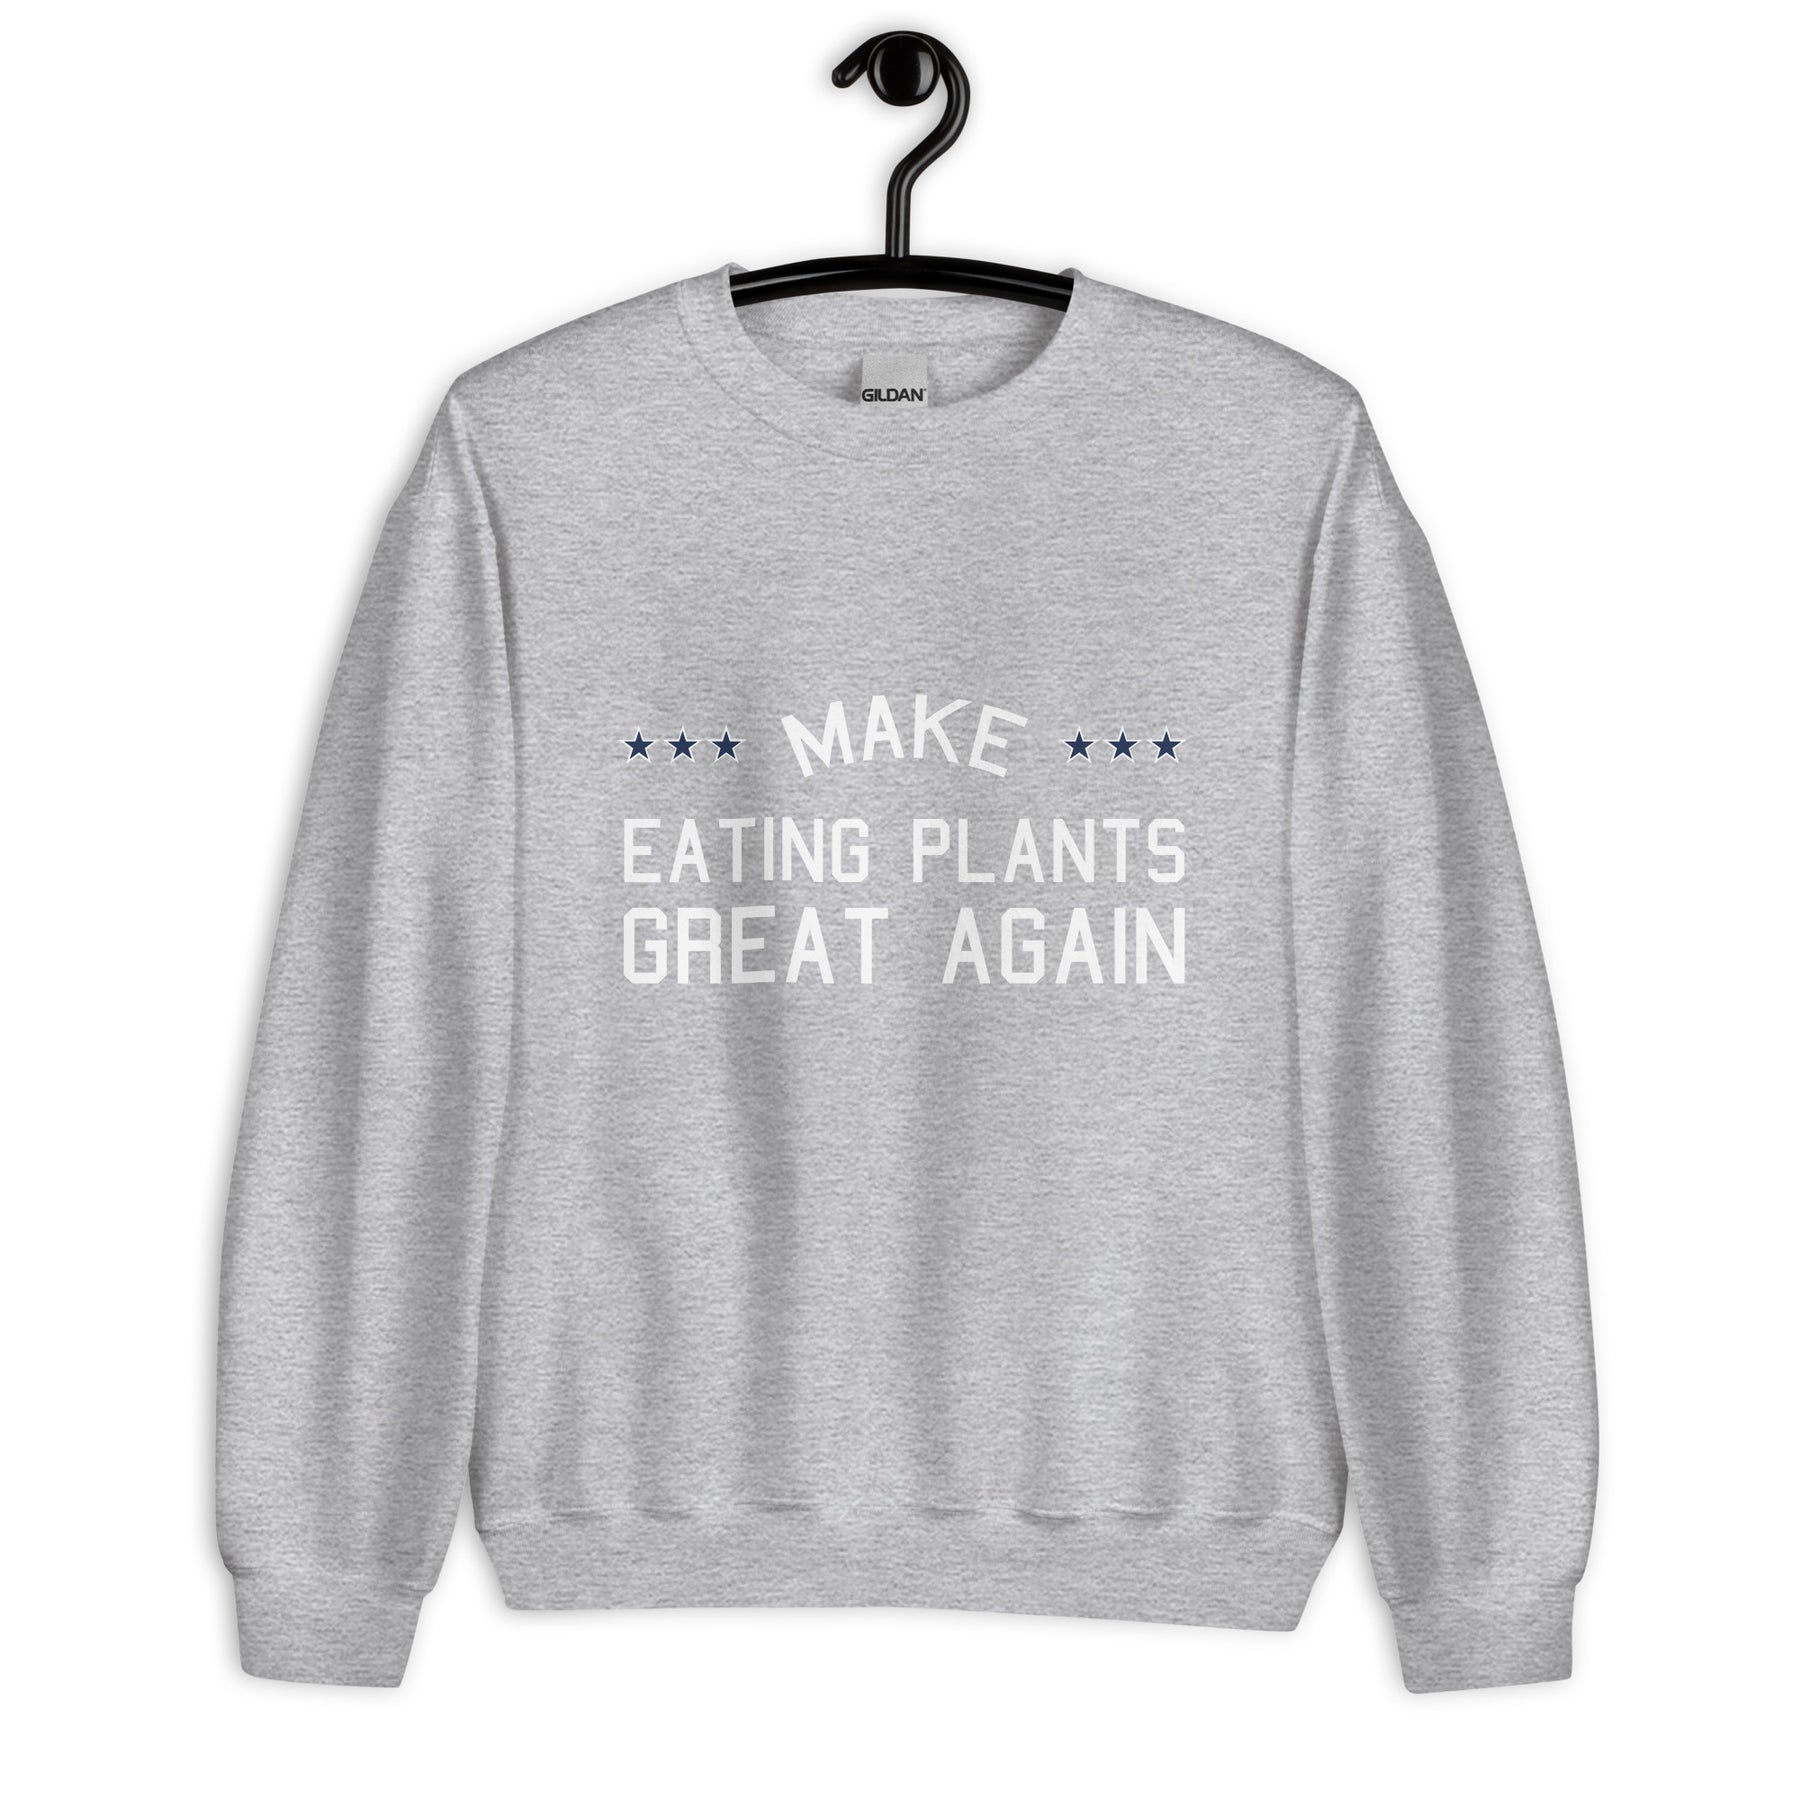 MAKE EATING PLANTS GREAT AGAIN Sweatshirt